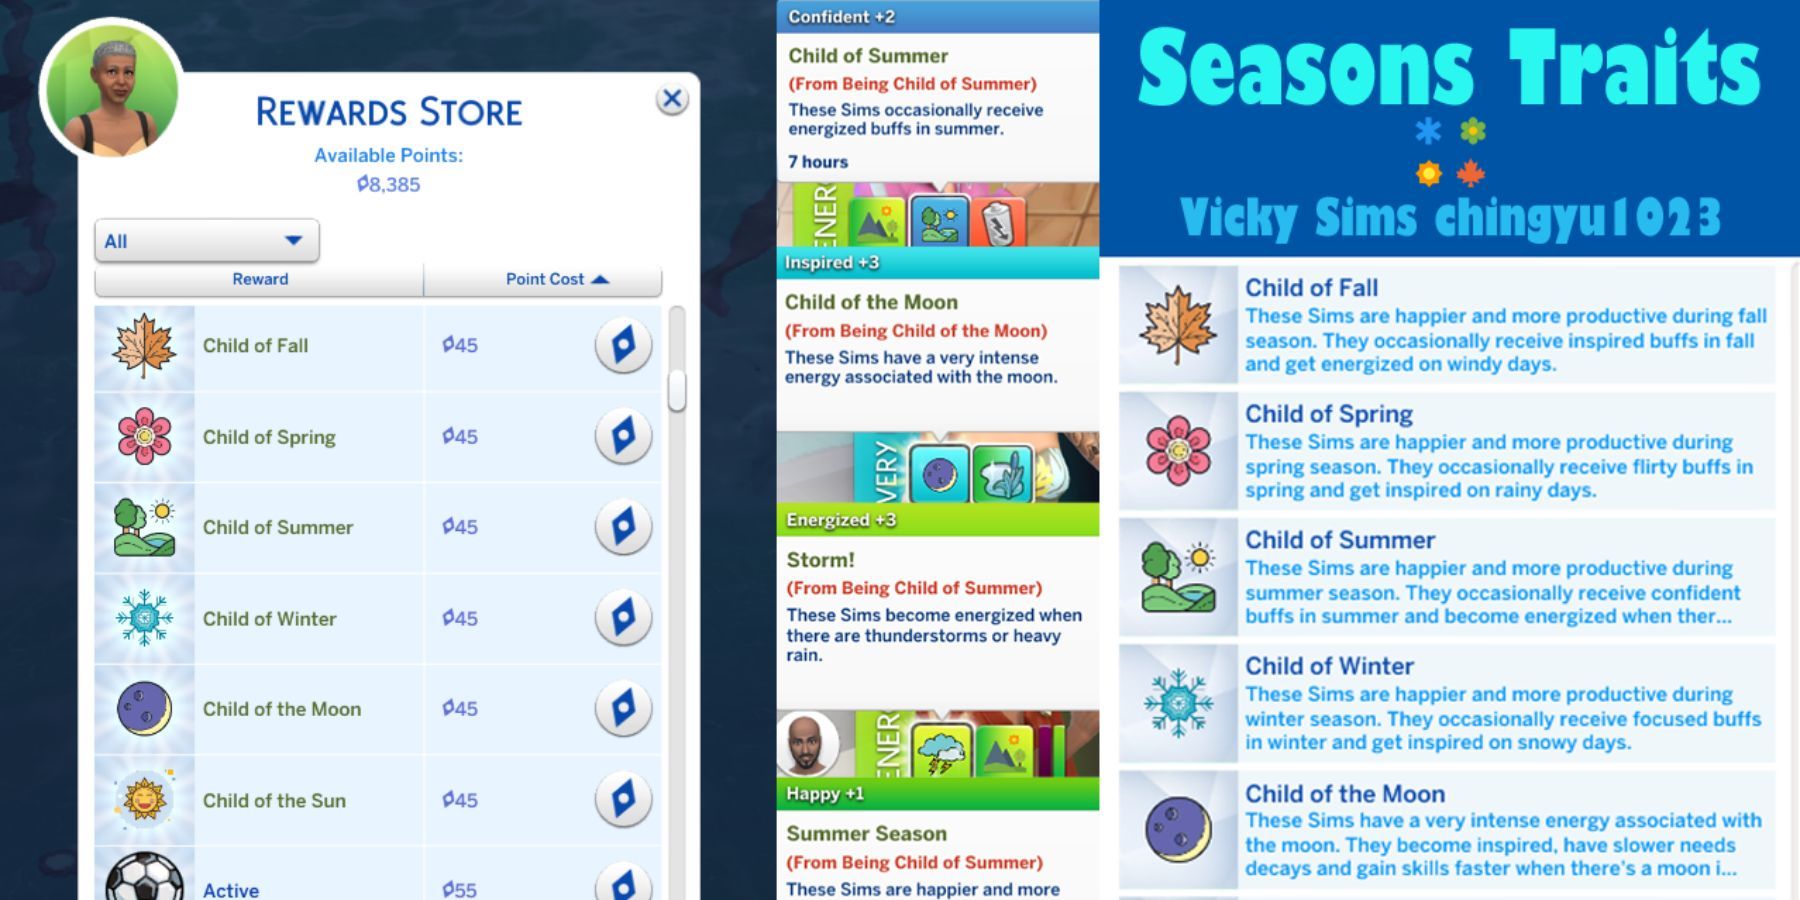 The Sims 4 Seasons Traits